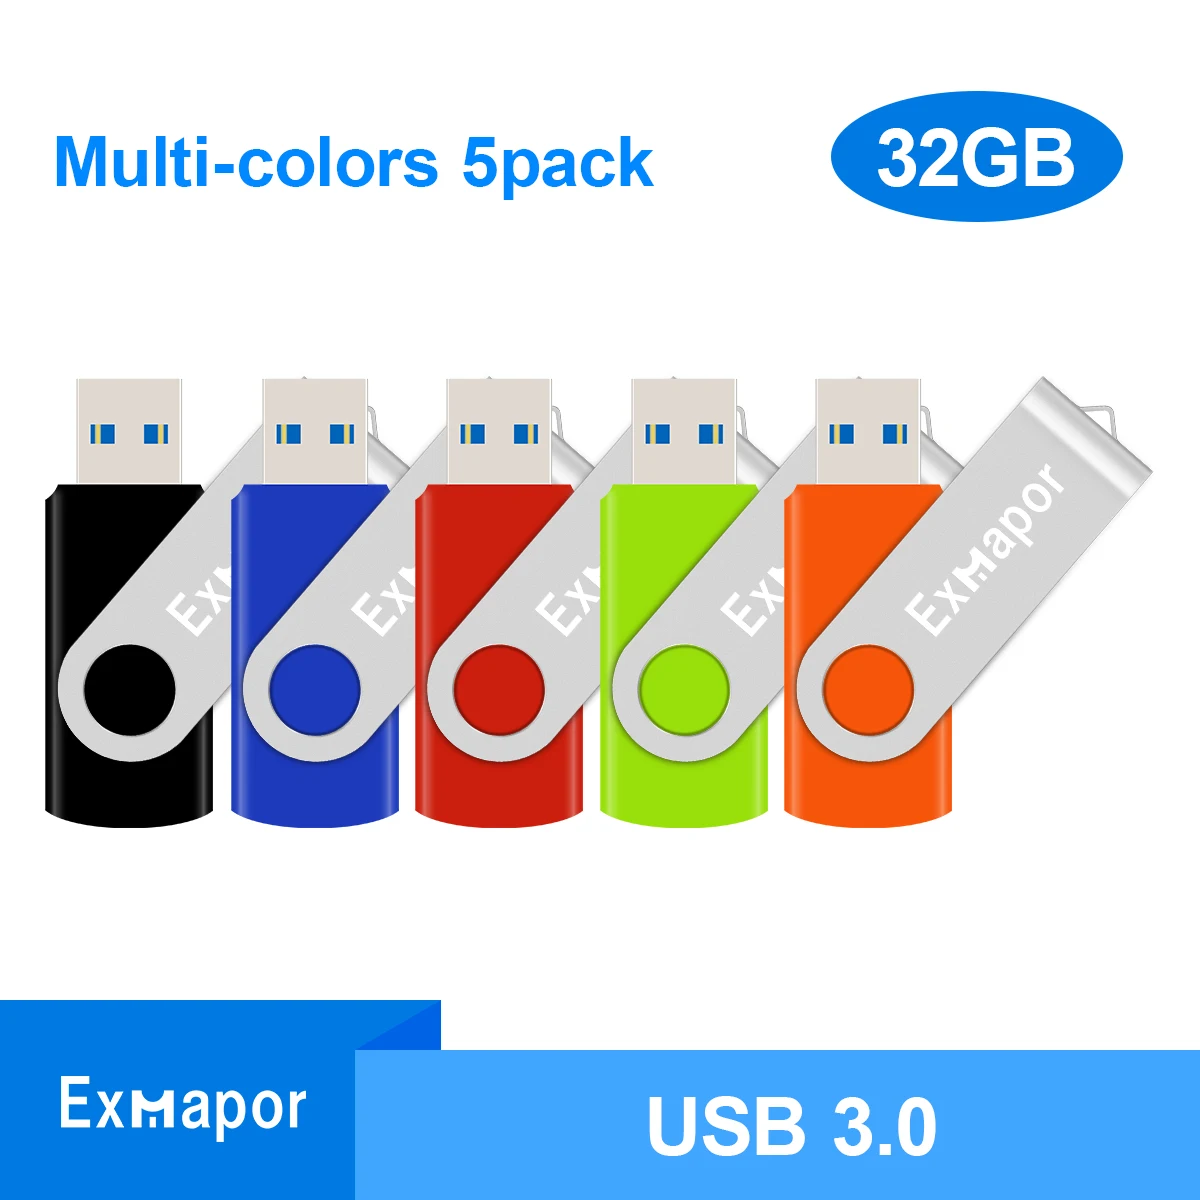 32GB Flash Drive 5 Pack, USB 3.0 Drive 32 GB Faster USB3.0 Exmapor Memory Stick Swivel Thumb Drives Zip Drive for Computer Mac